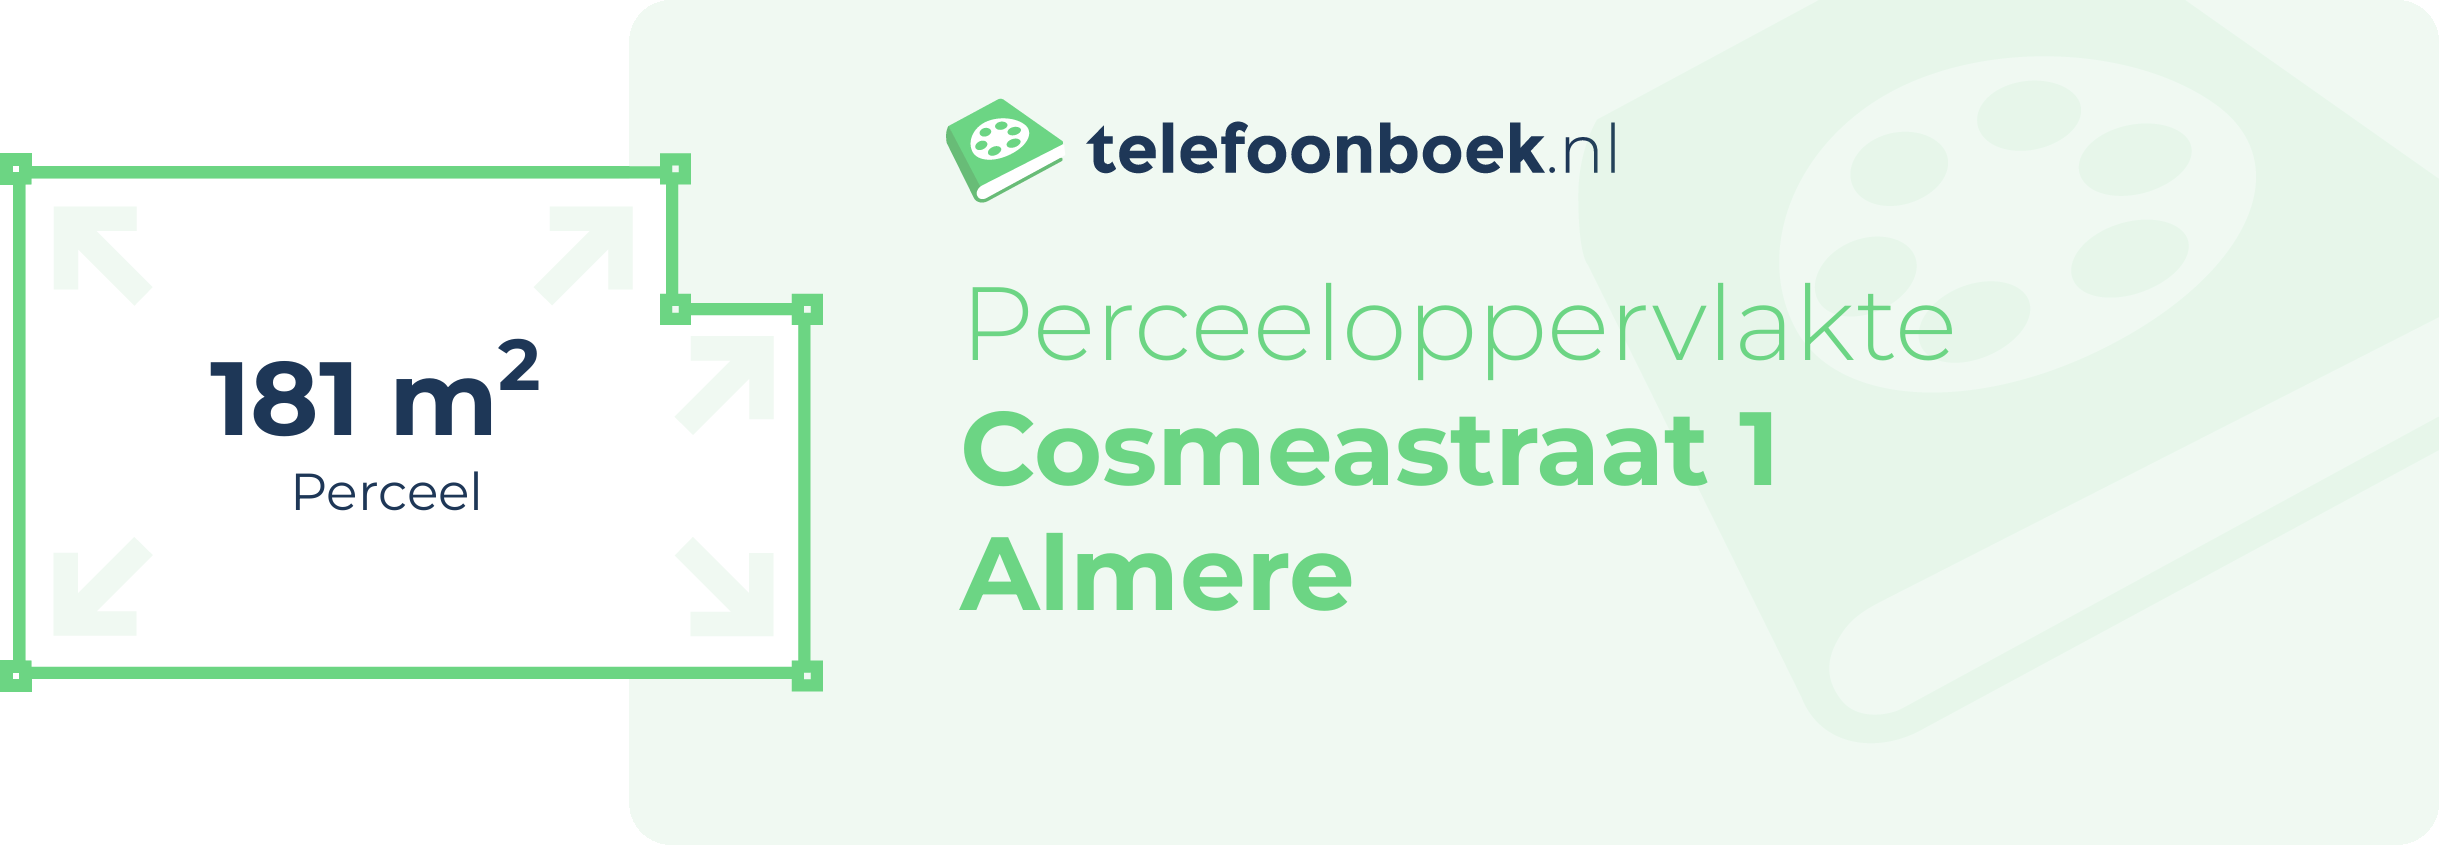 Perceeloppervlakte Cosmeastraat 1 Almere